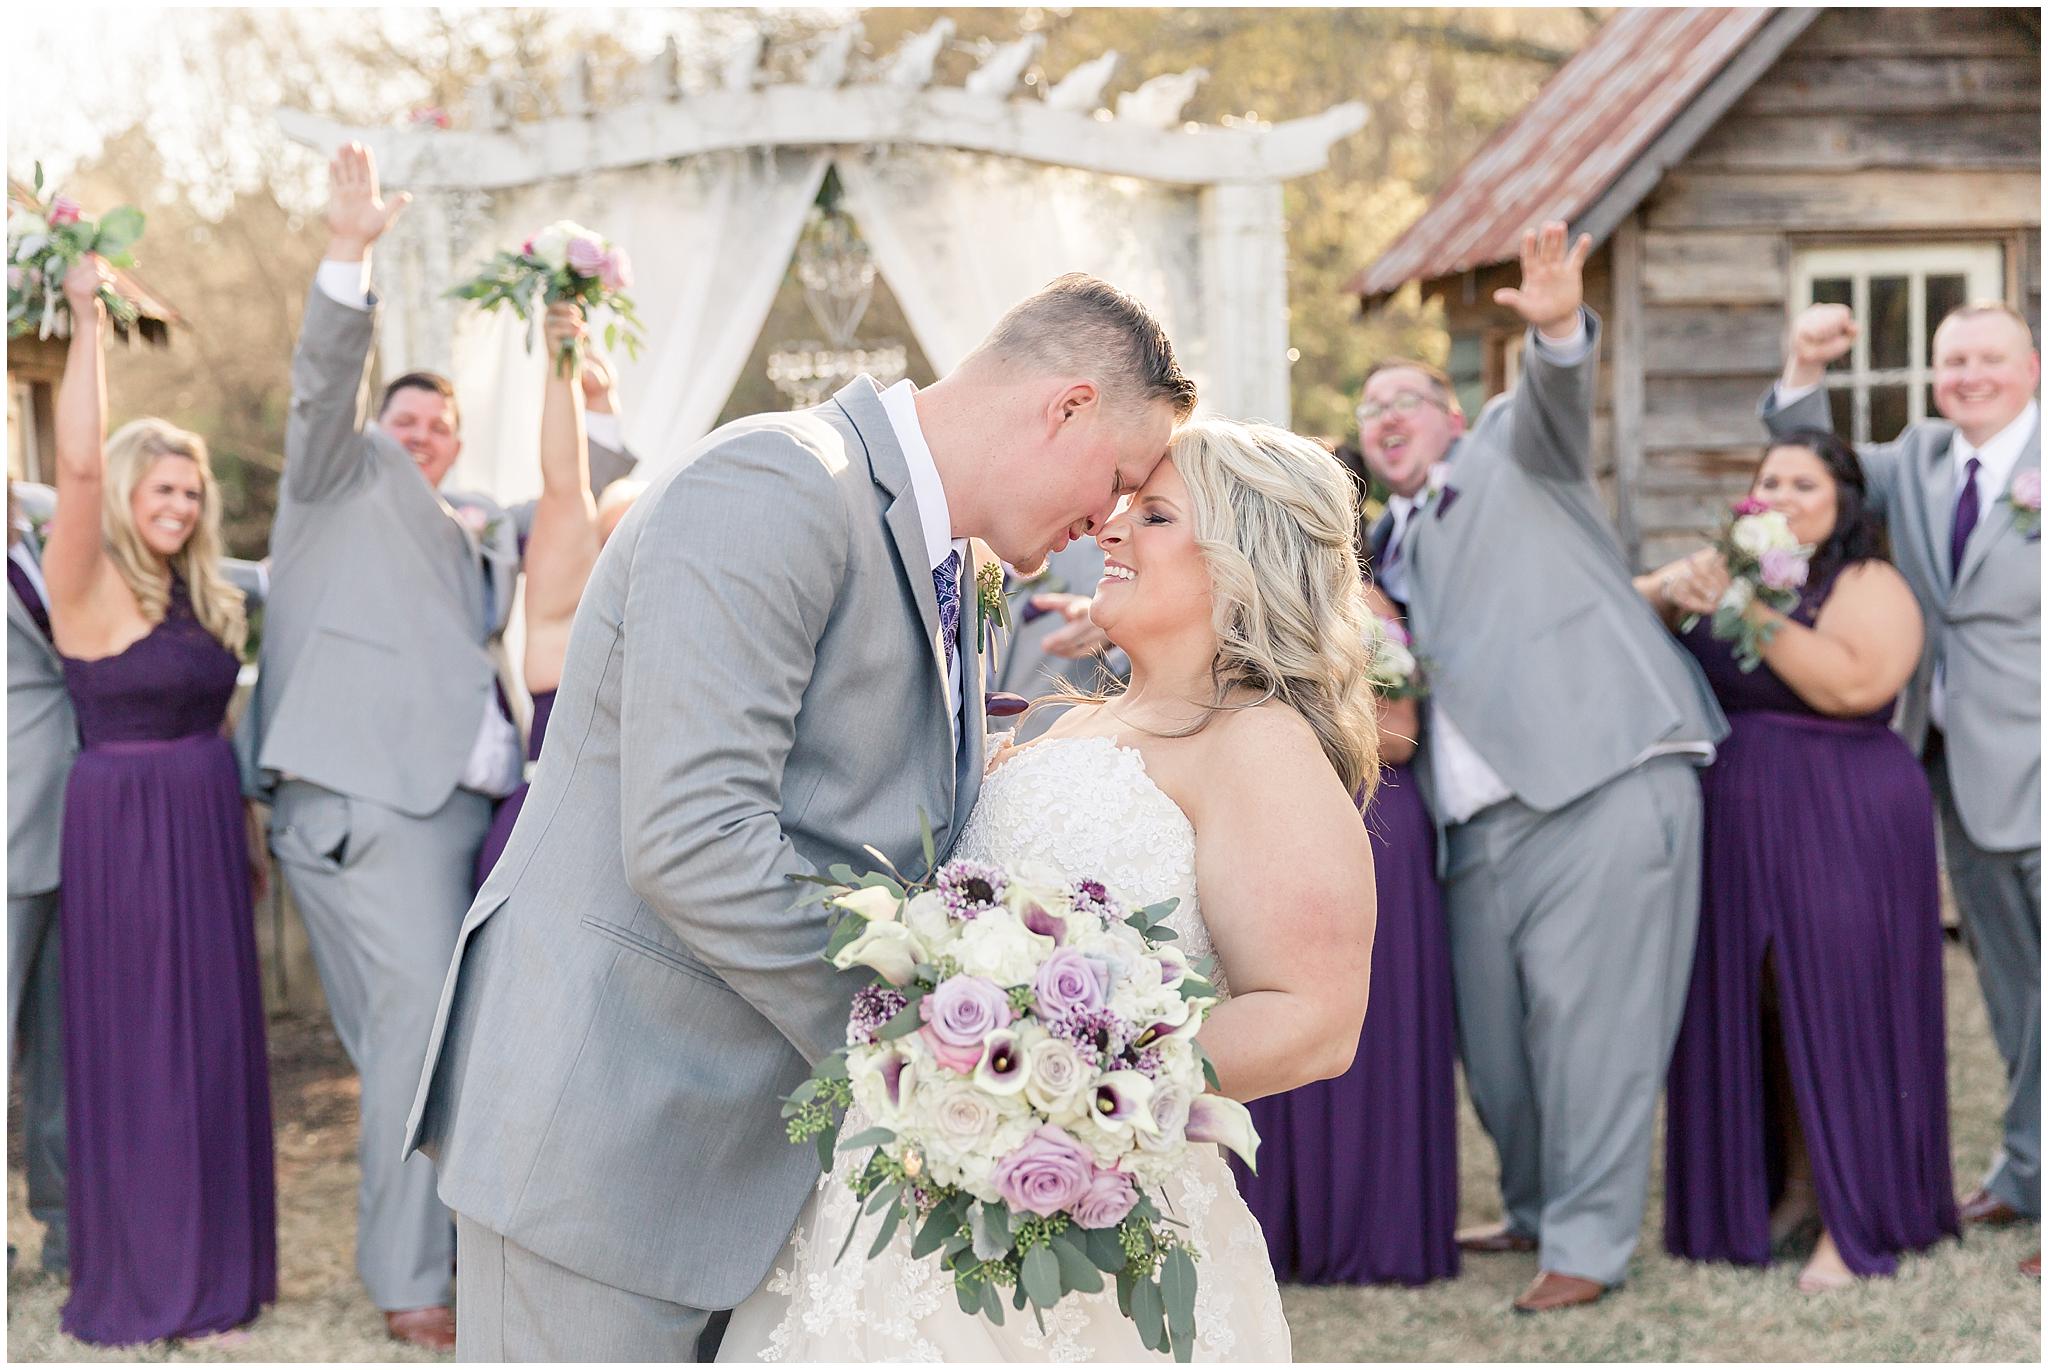 9 oaks farm wedding party bridesmaids groomsmen purple gray suits_0004.jpg